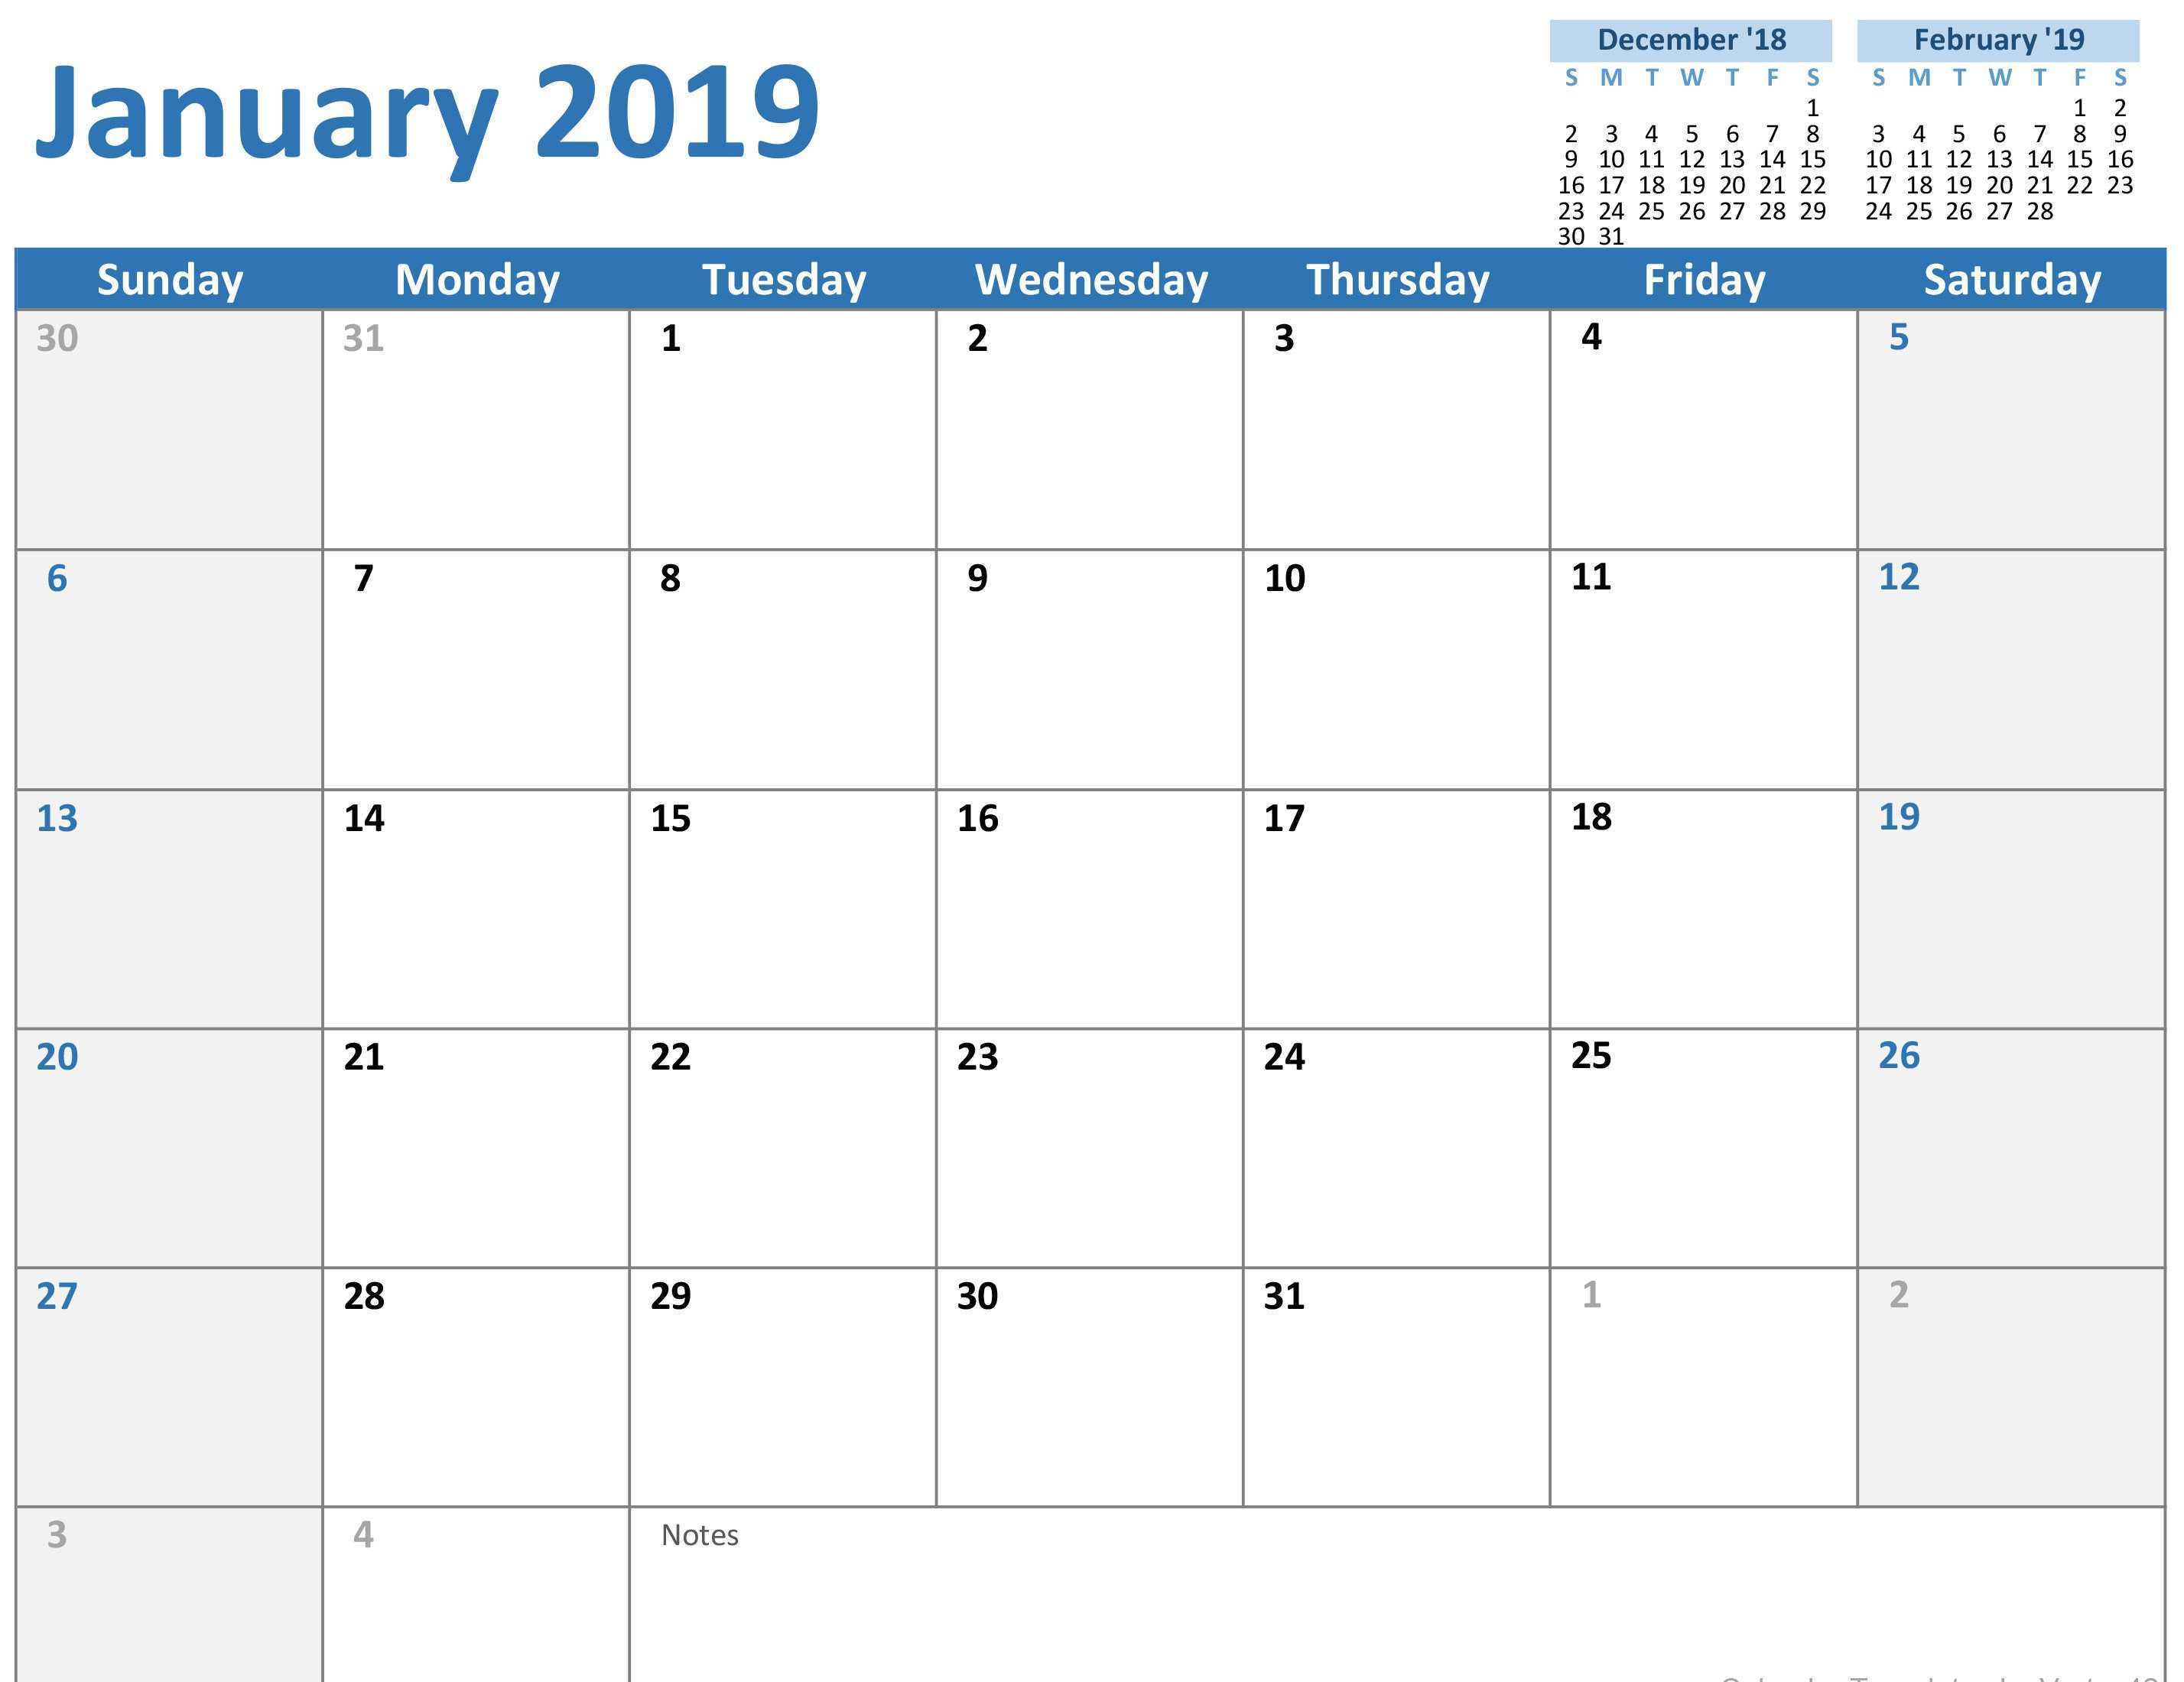 89 Adding Daily Calendar Template December 2018 For Free for Daily Calendar Template December 2018